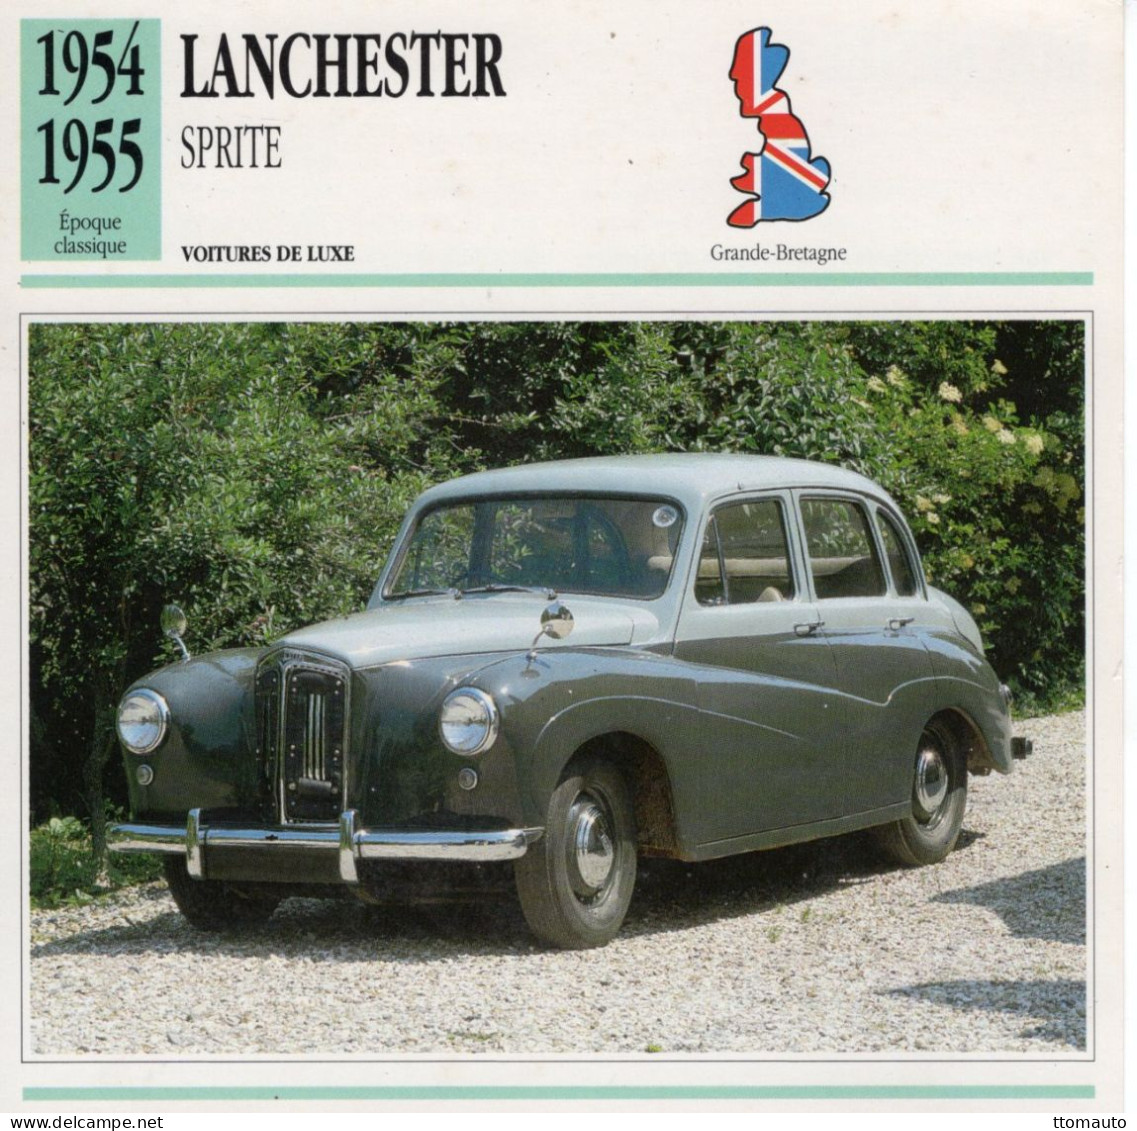 Lanchester Sprite  -  1955  - Voiture De Luxe -  Fiche Technique Automobile (GB) - Coches